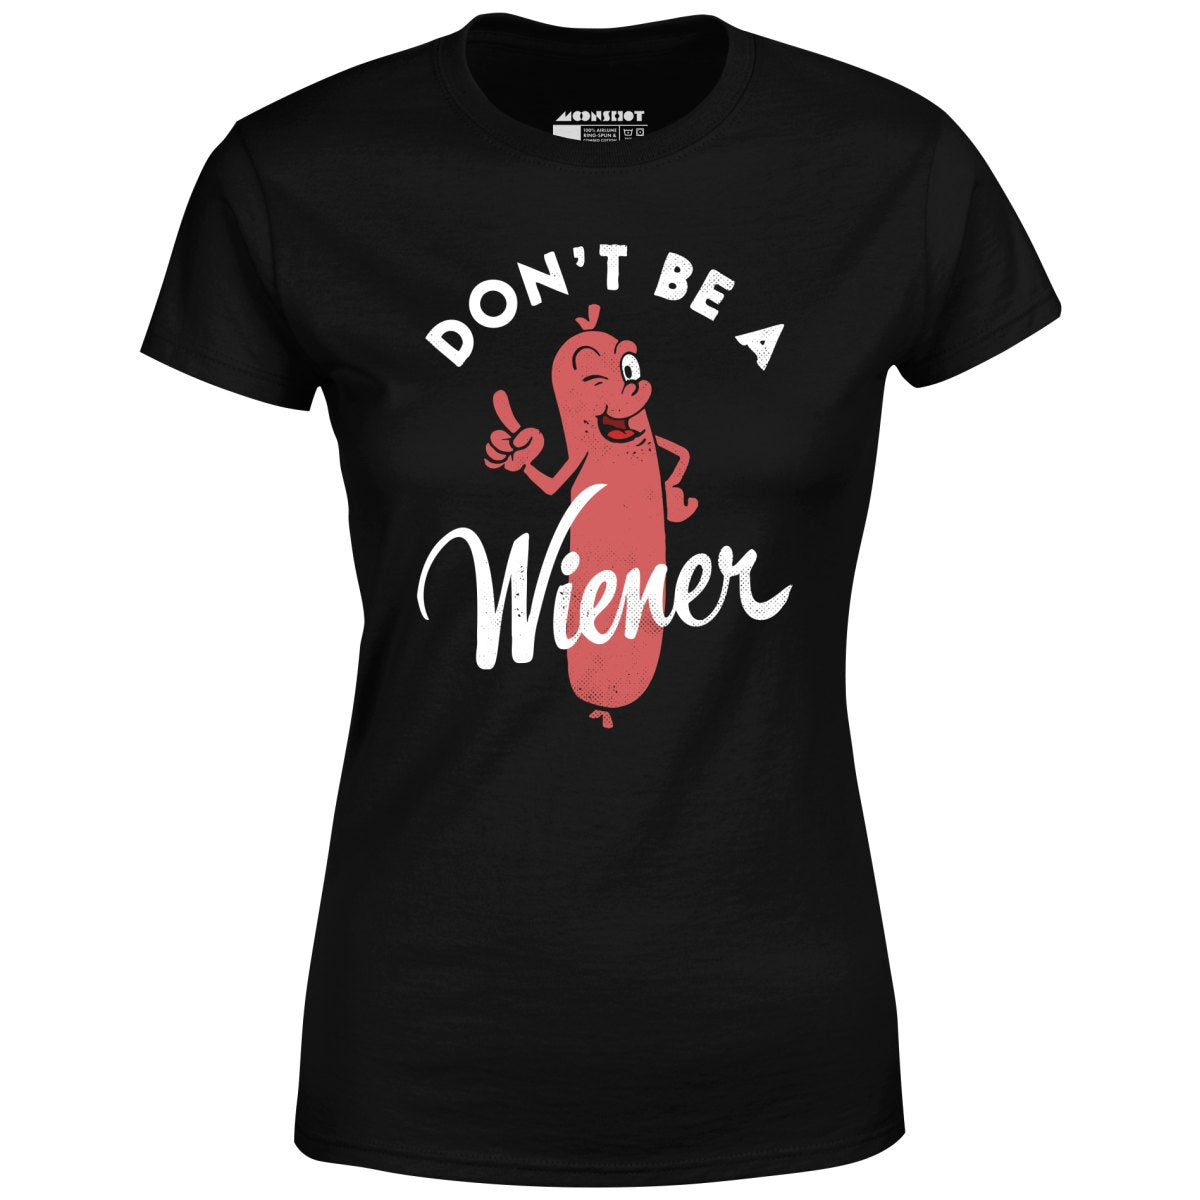 Don't Be a Wiener - Women's T-Shirt